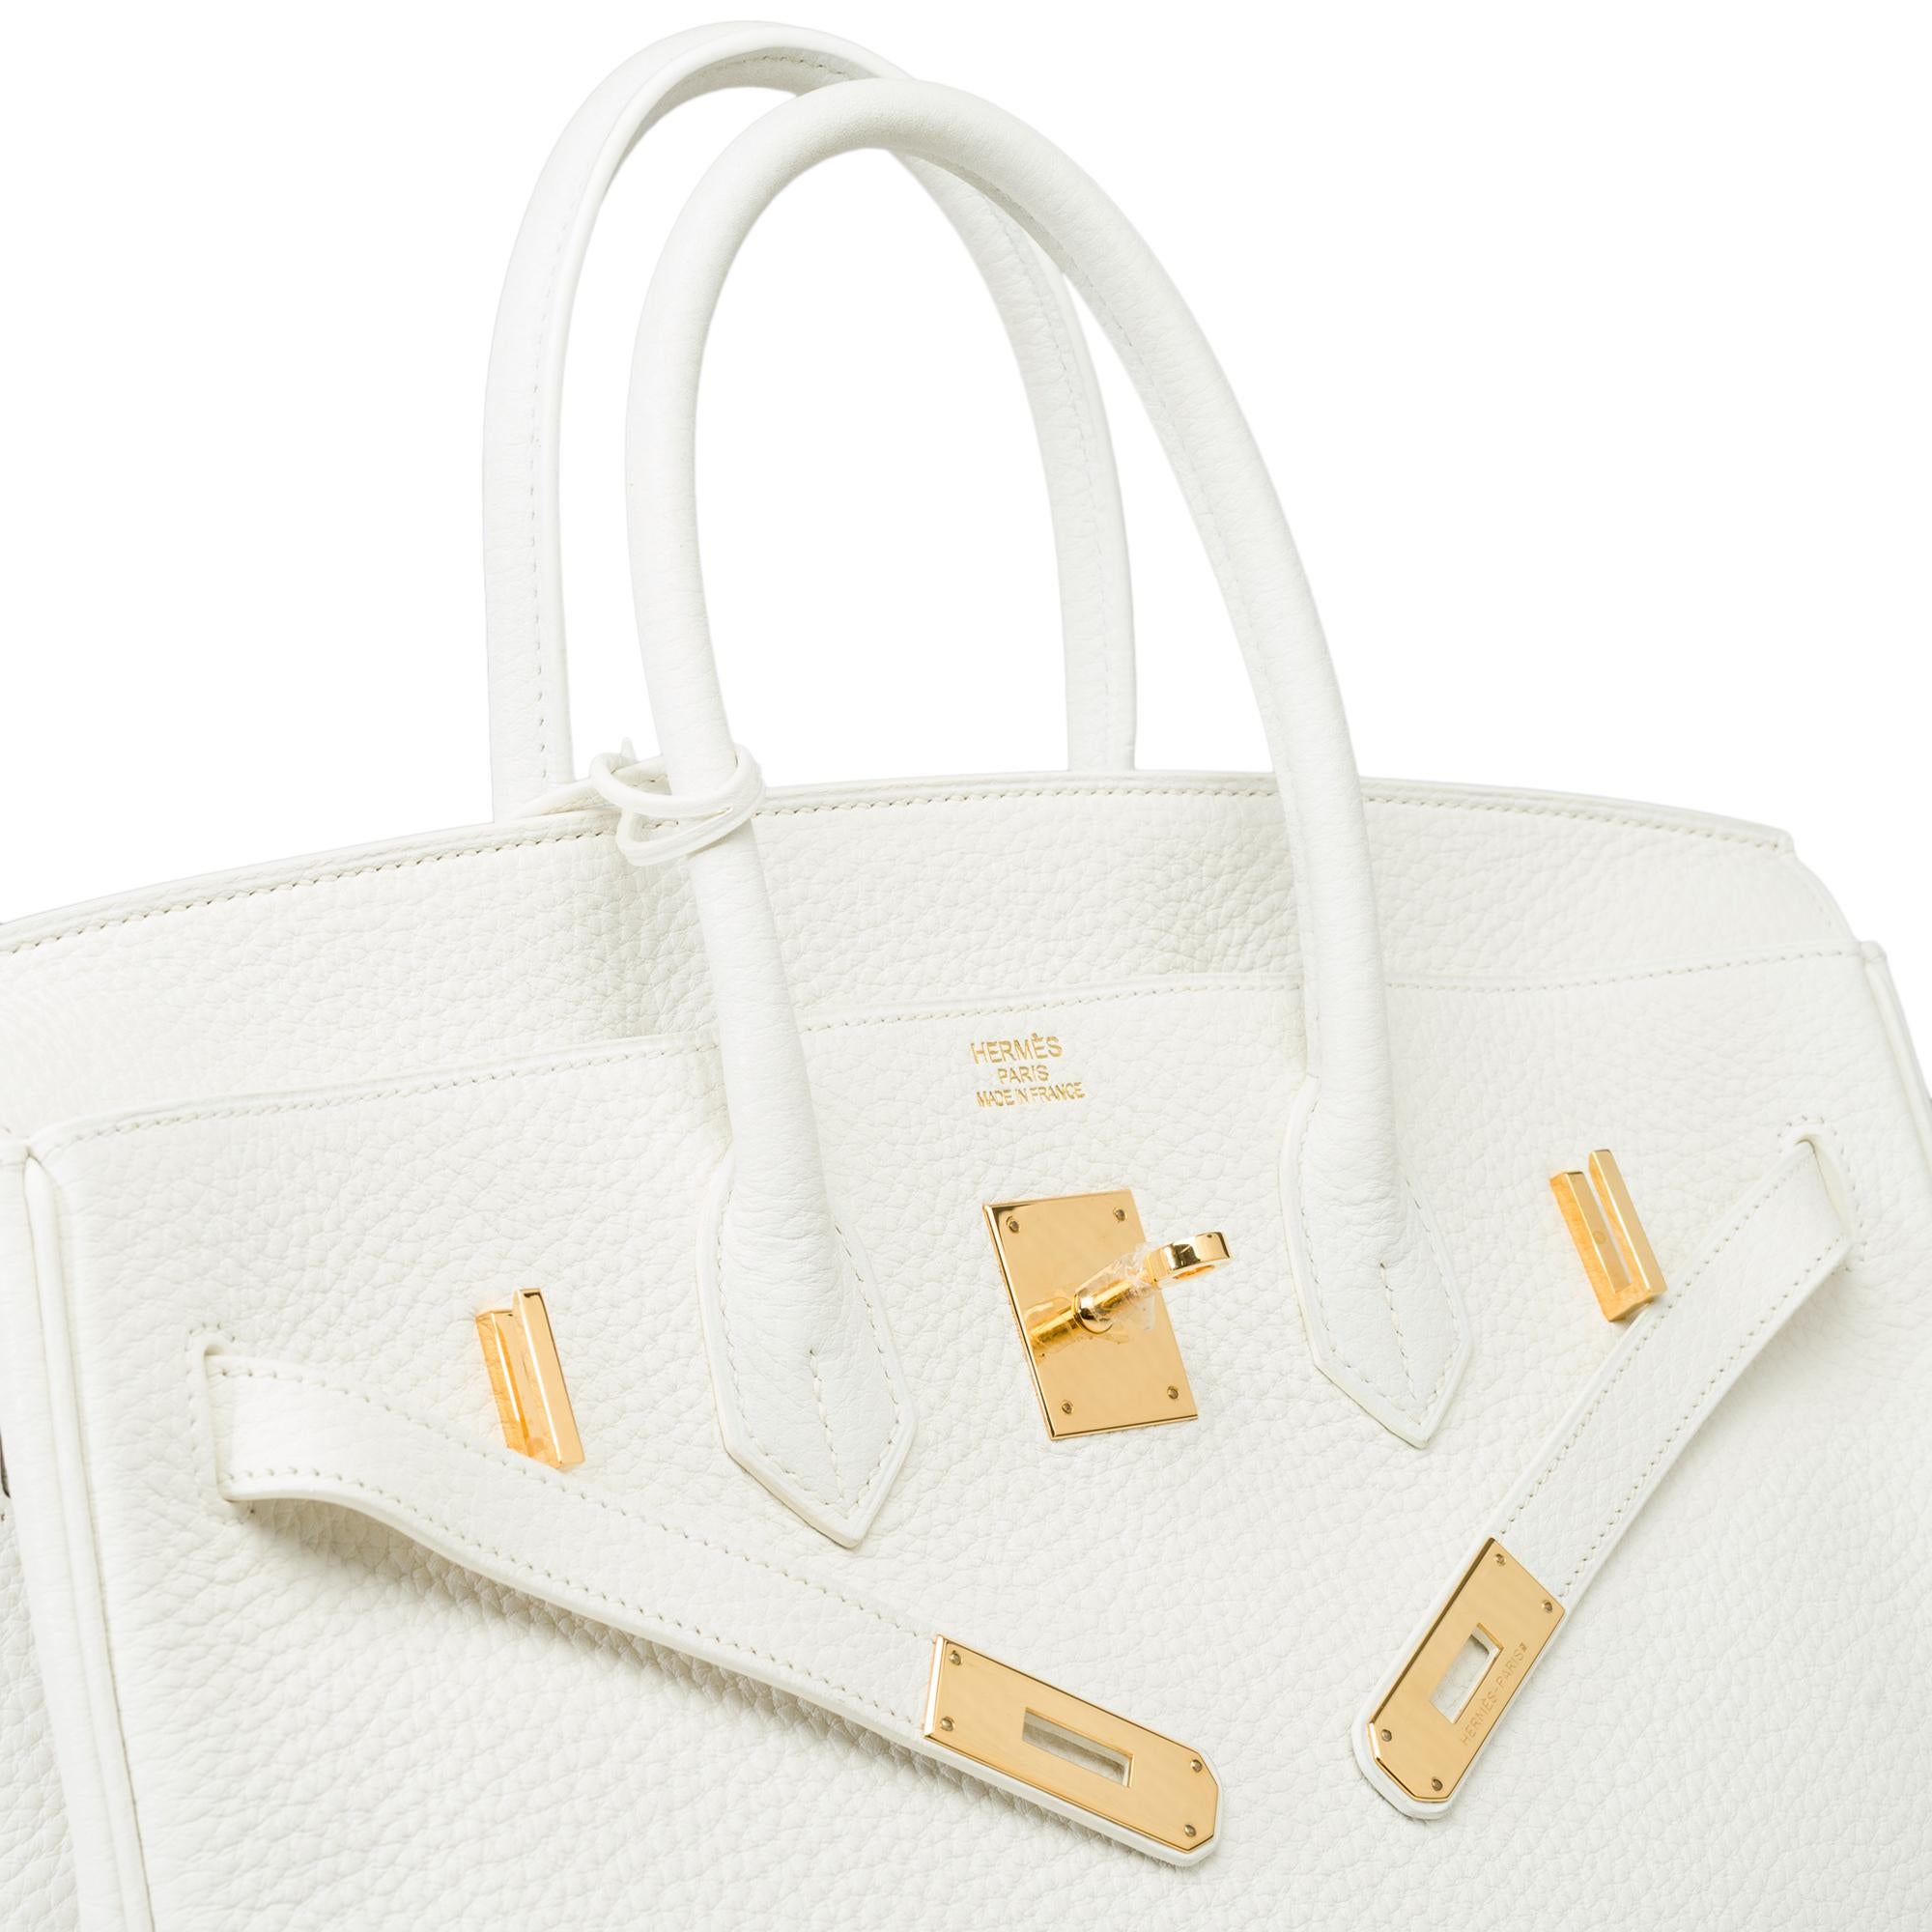 Stunning Hermès Birkin 35 handbag in White Taurillon Clemence leather, GHW 2